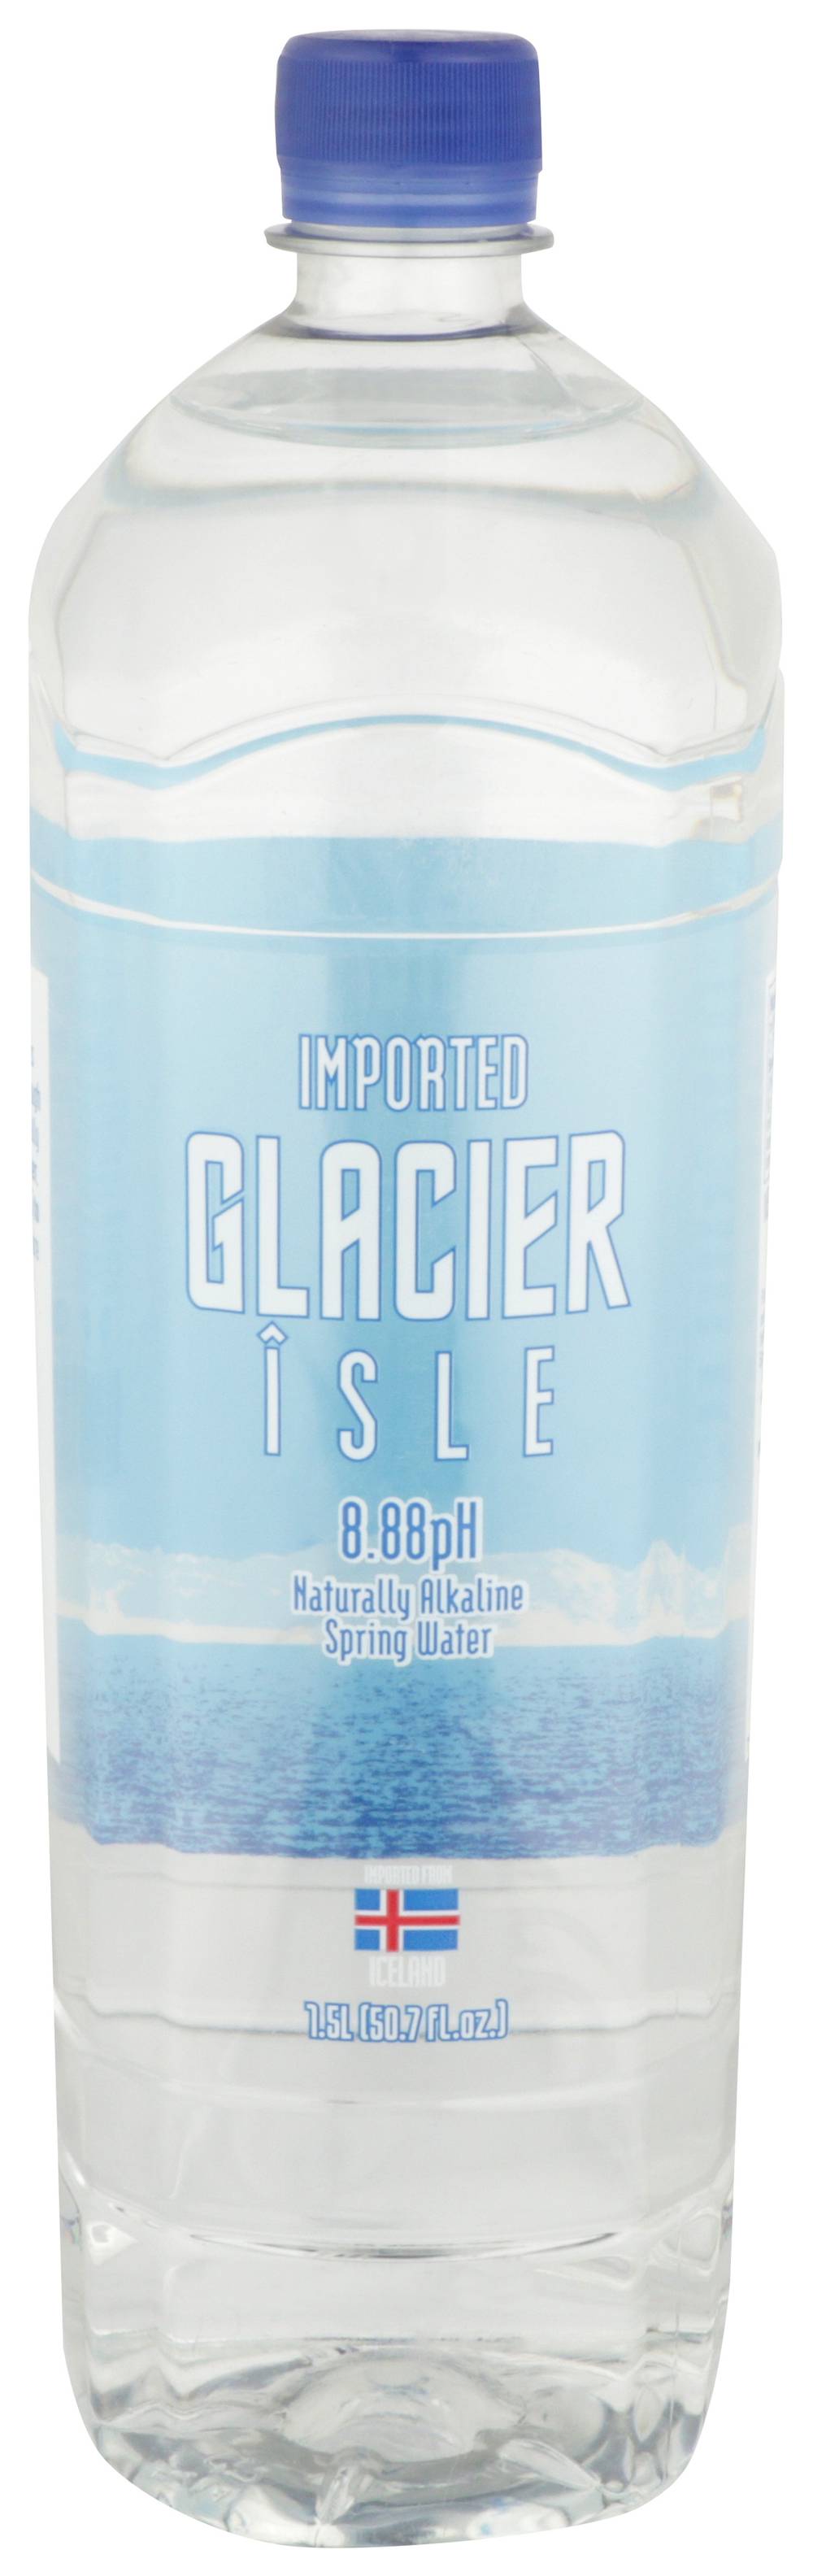 Glacier Isle Icelandic Water Bottle (50.7 fl oz)